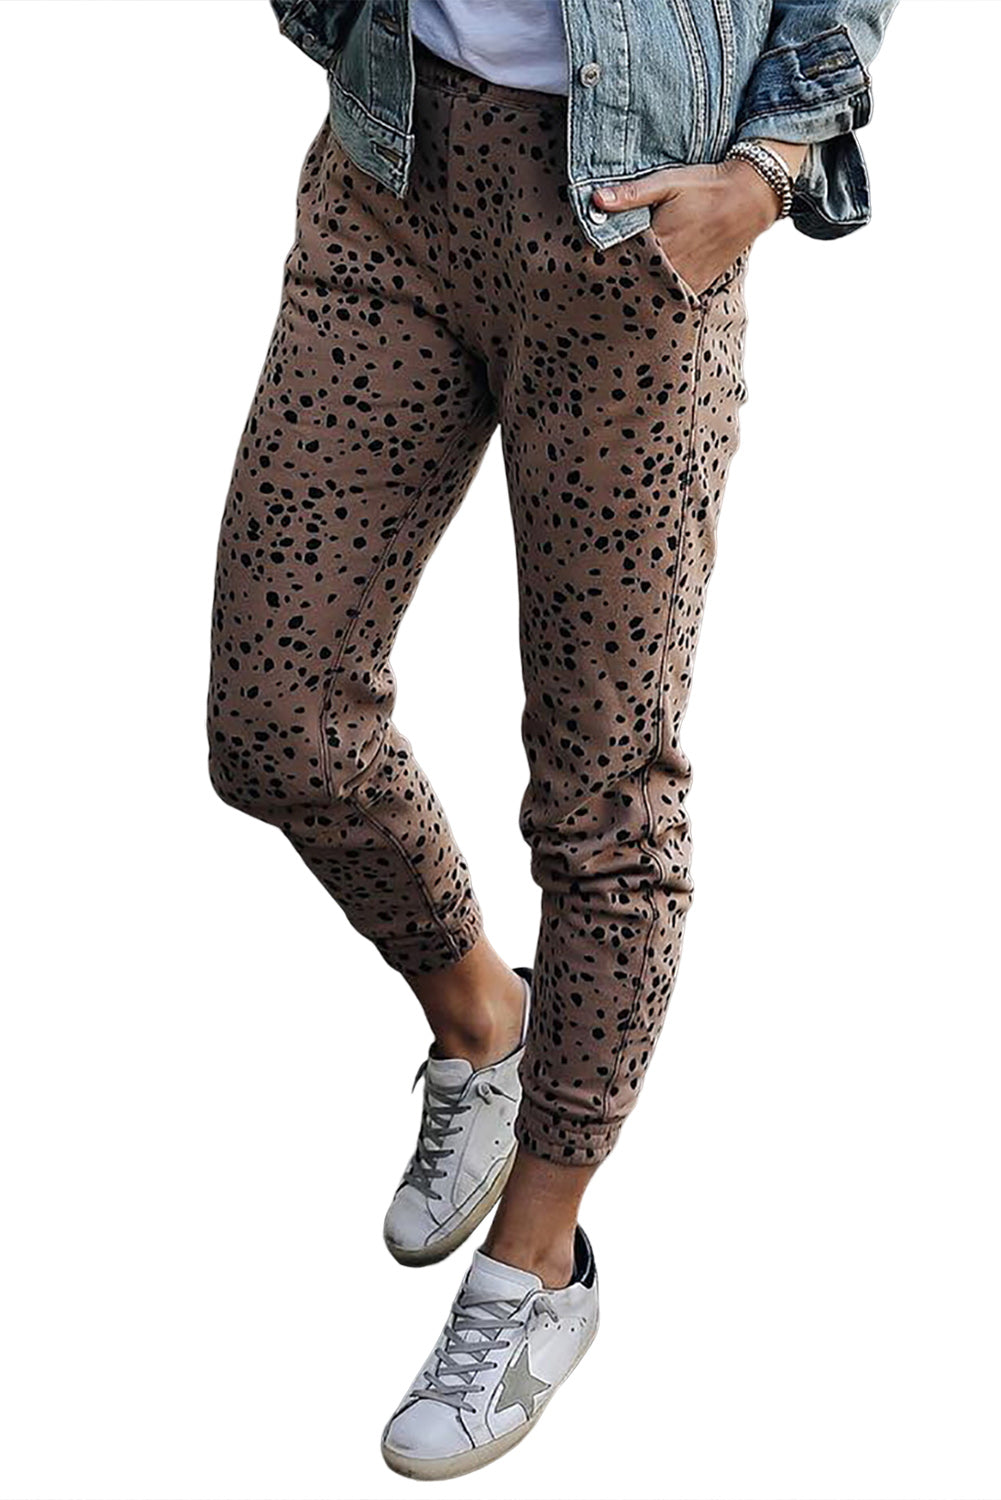 Leopard Animal Spots Pocketed Casual Skinny Womens Pants - US2EInc Apparel Plug Ltd. Co